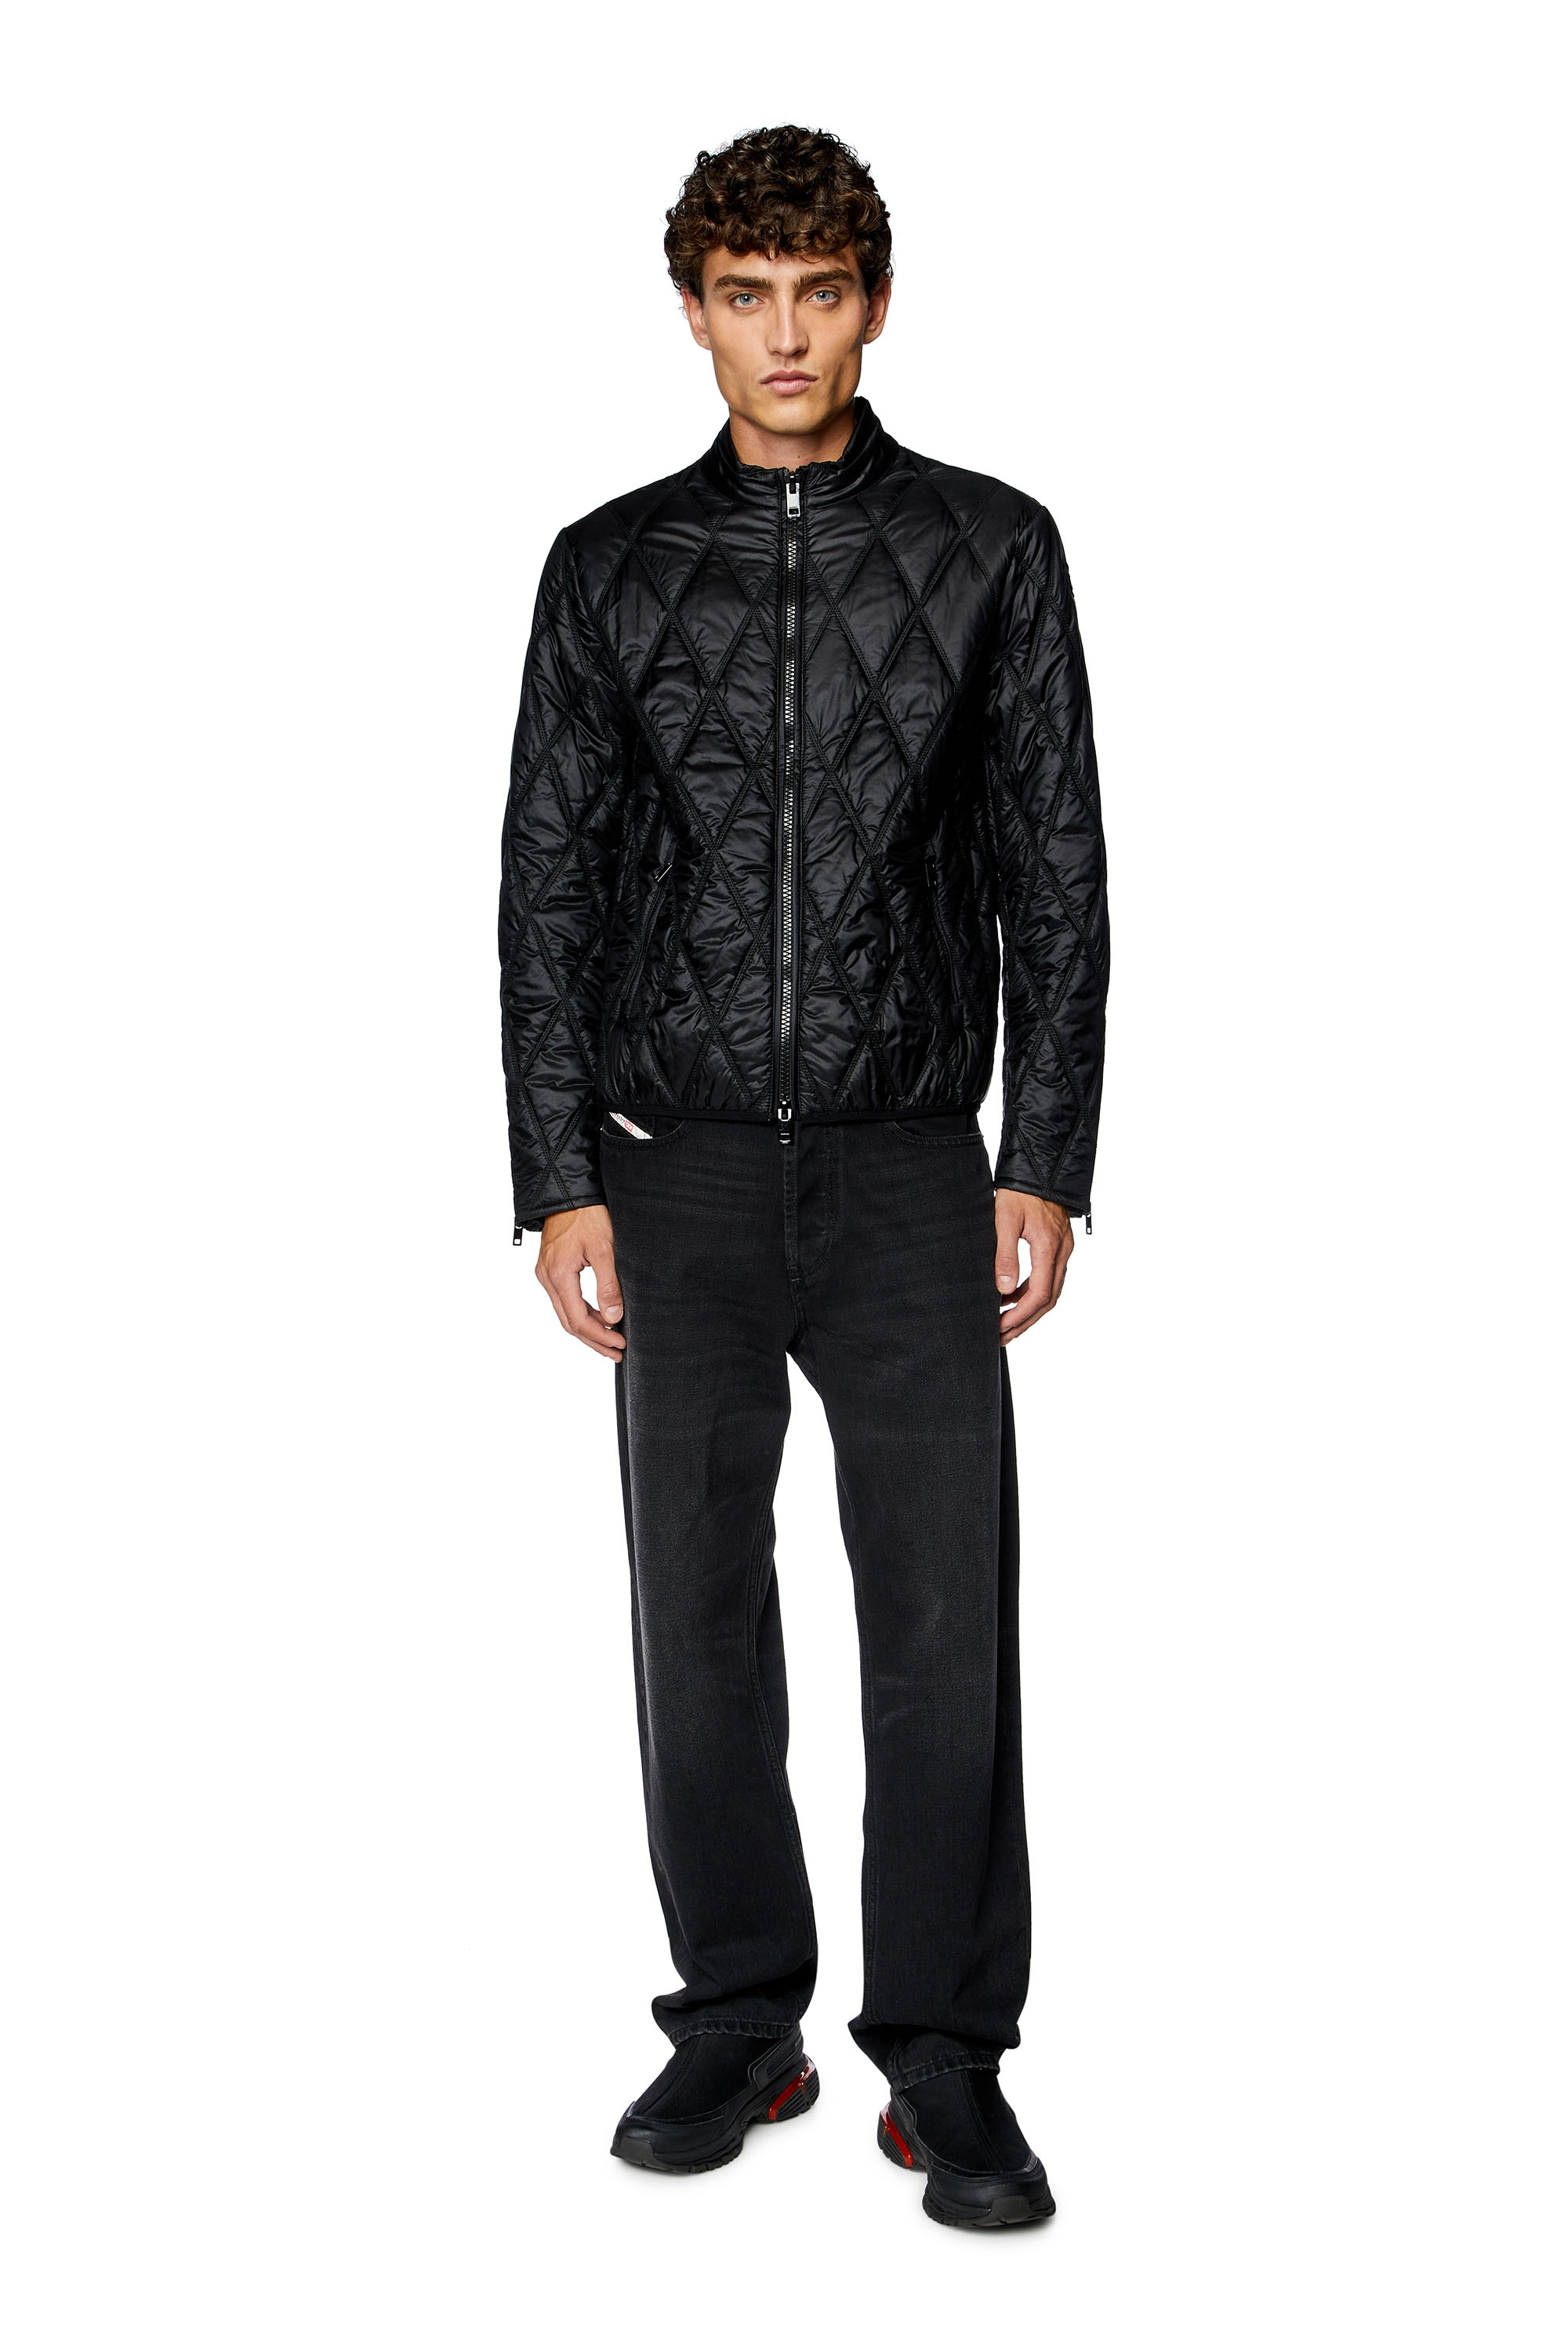 Diesel - J-NIEL, Man Mock-neck jacket in quilted nylon in Black - Image 2